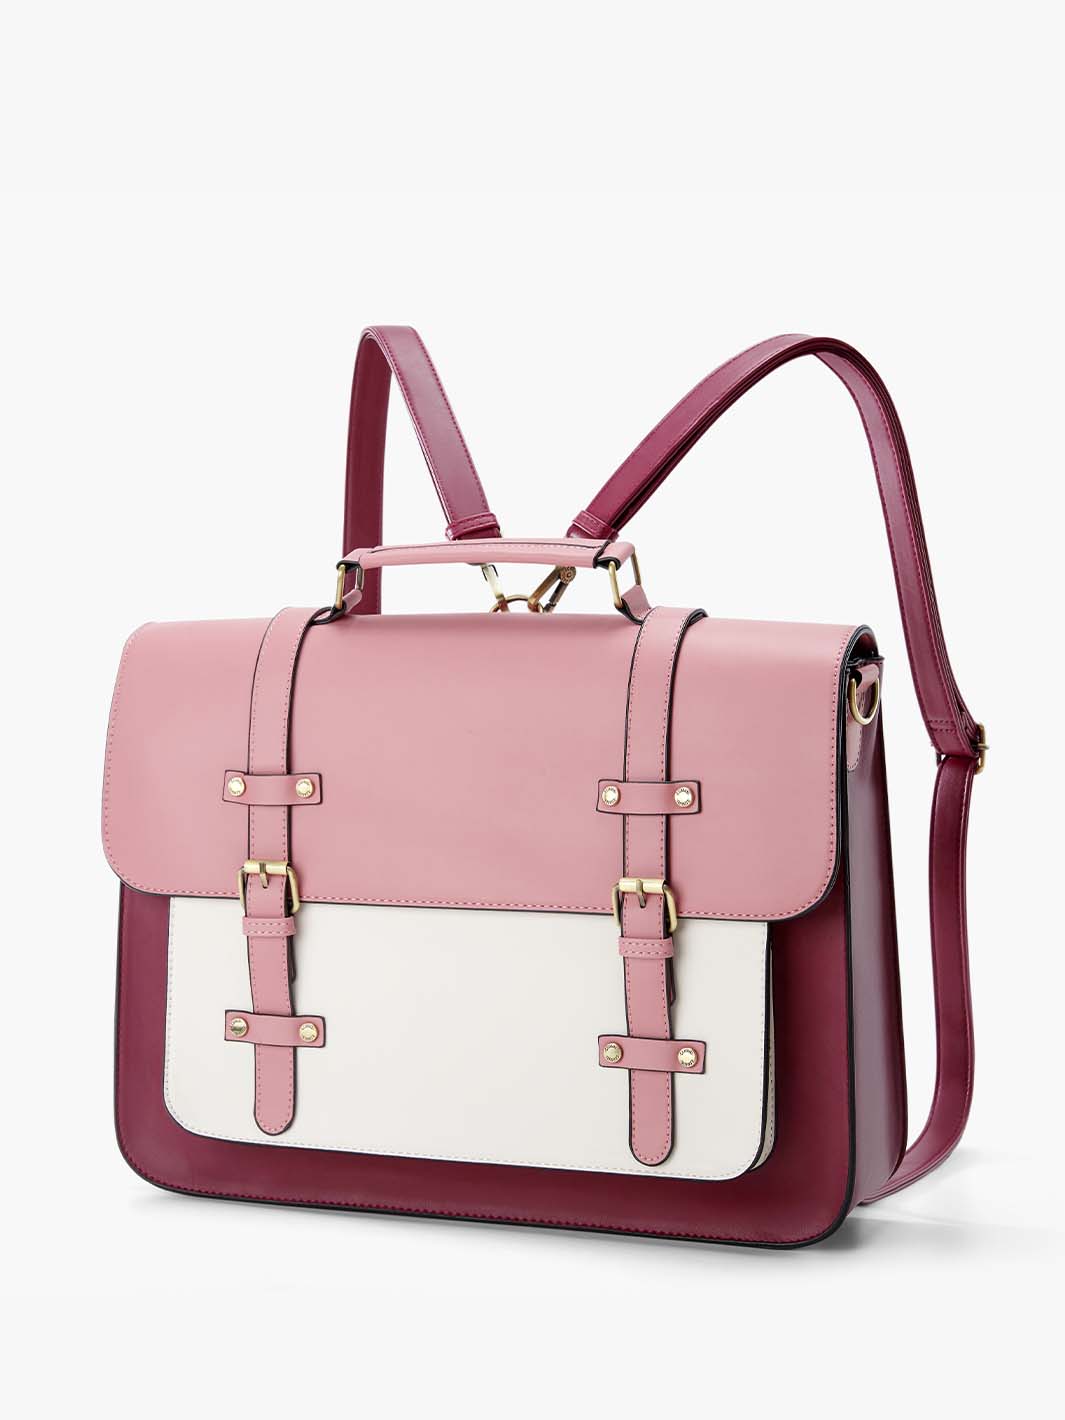 ECOSUSI Vintage Crossbody Messenger Bag Satchel Purse Handbag Briefcase for  Women & Girl, Coffee 